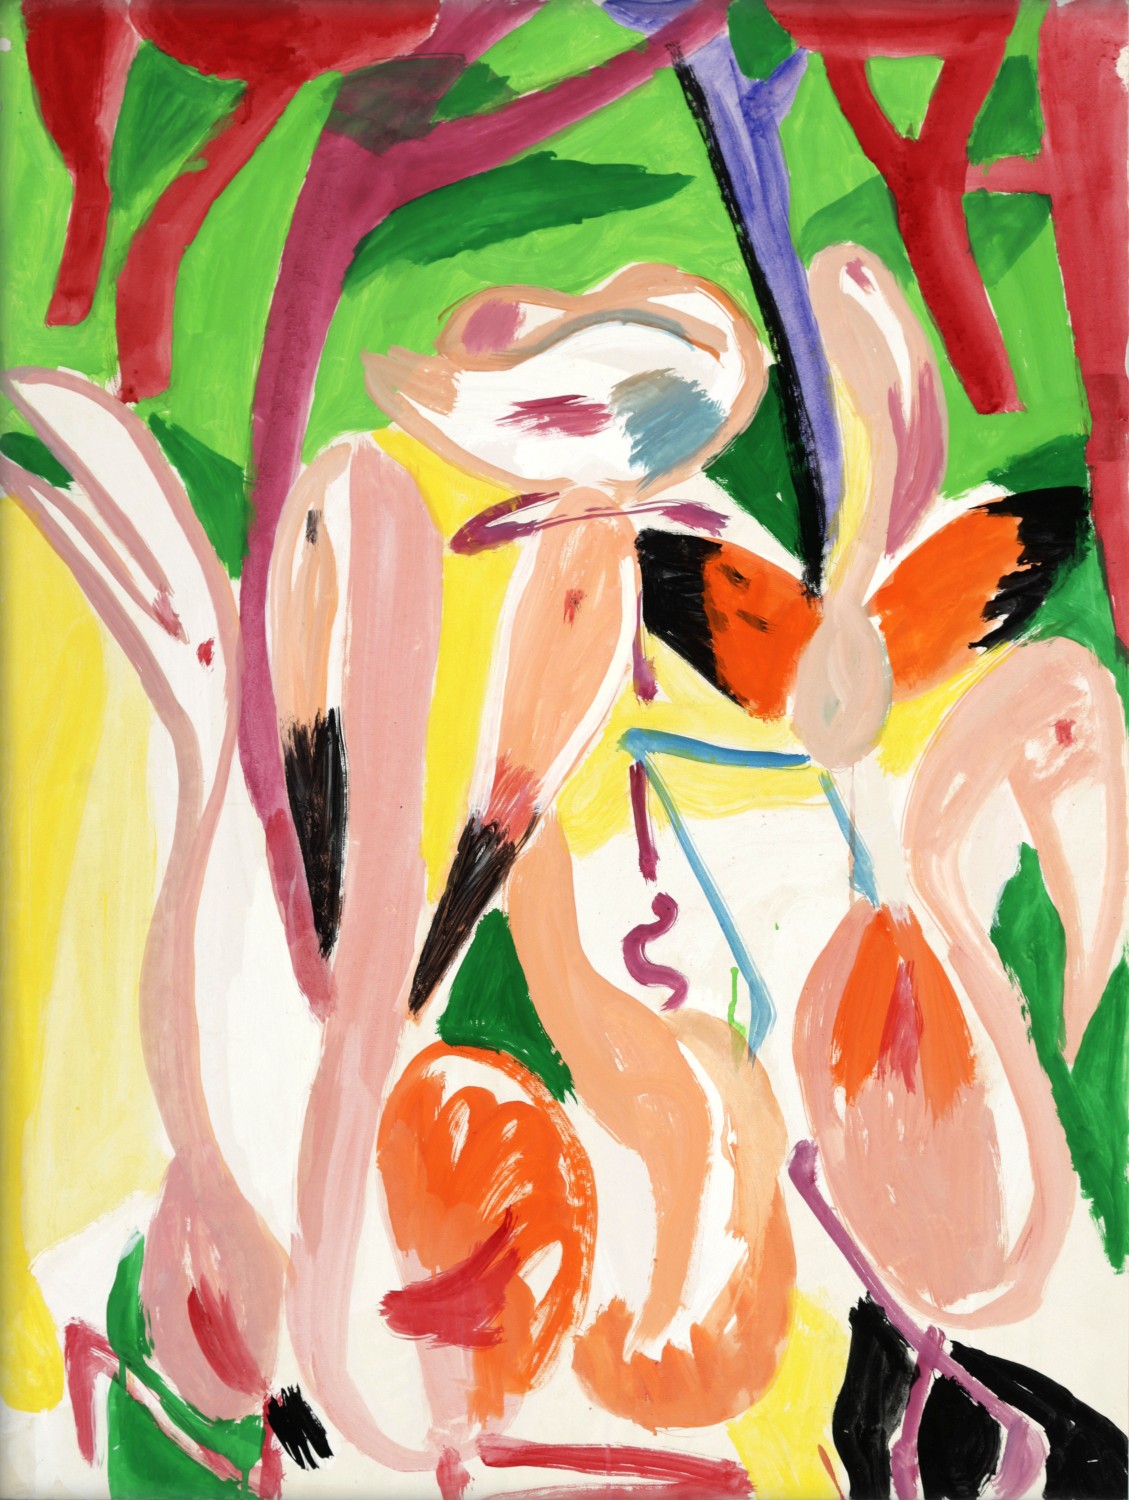 Fritz Keller, Flamingos